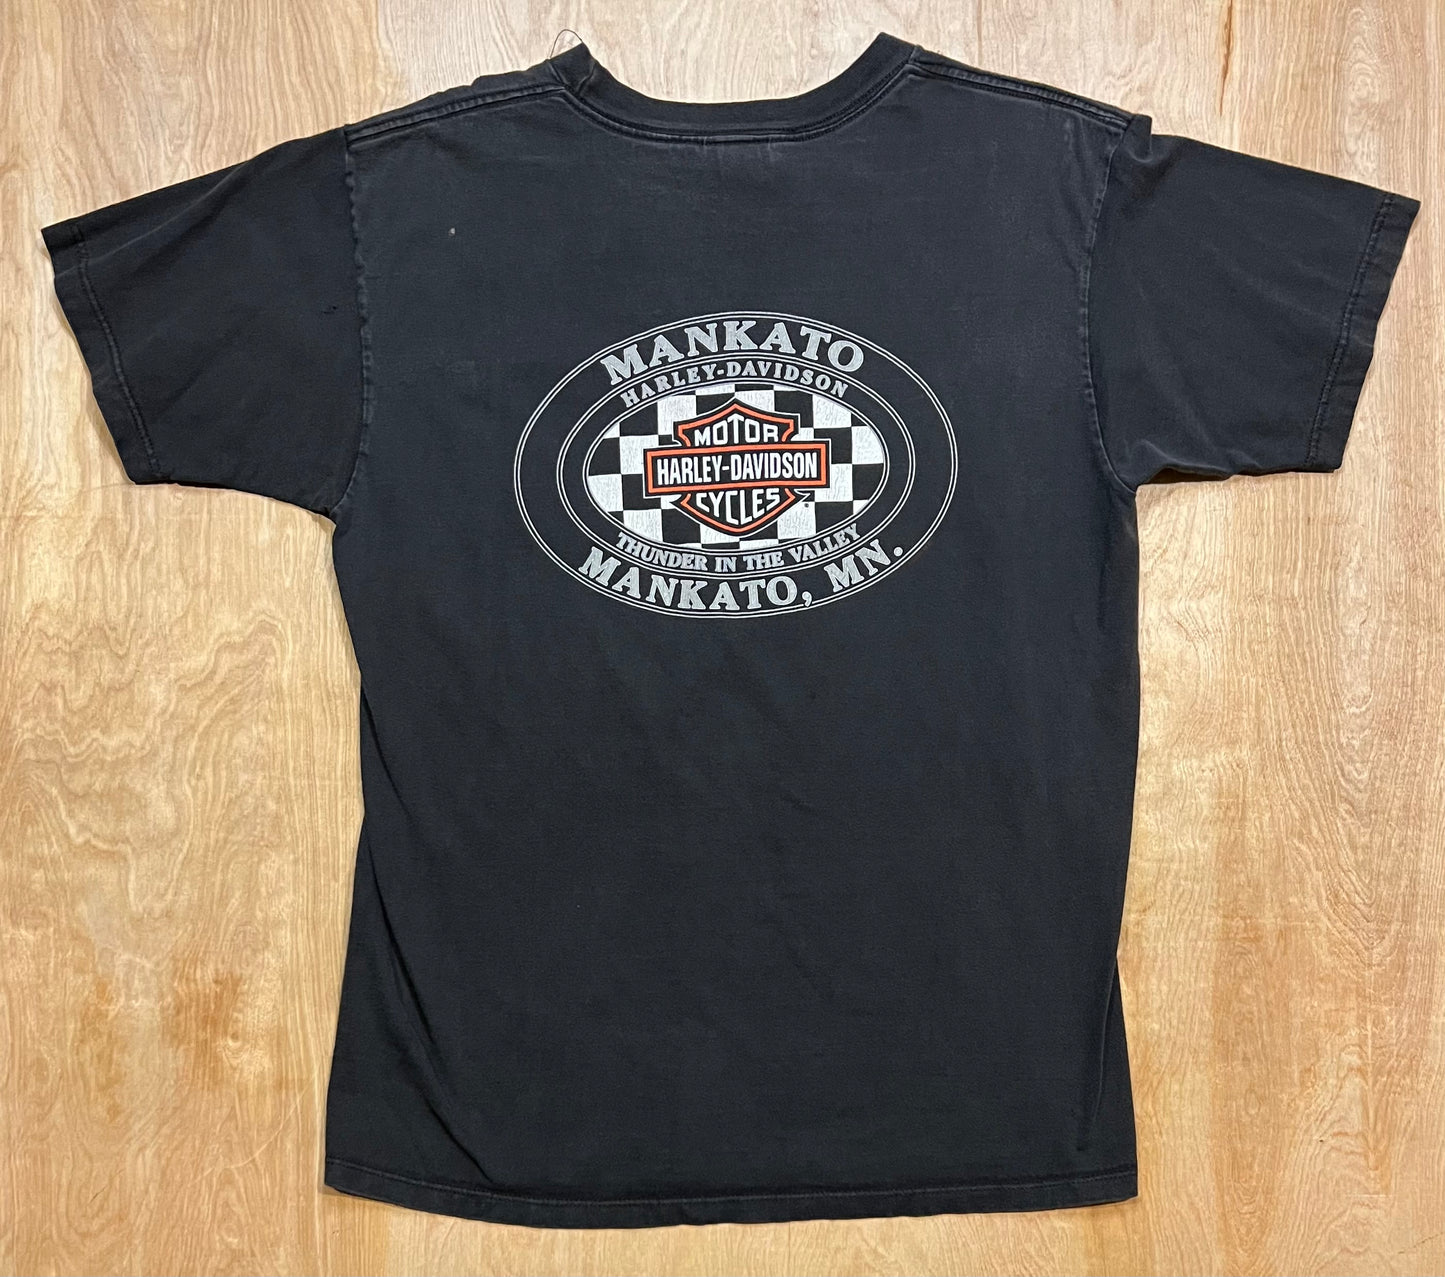 Vintage Harley Davidson "Thunder in the Valley" Mankato, MN T-Shirt